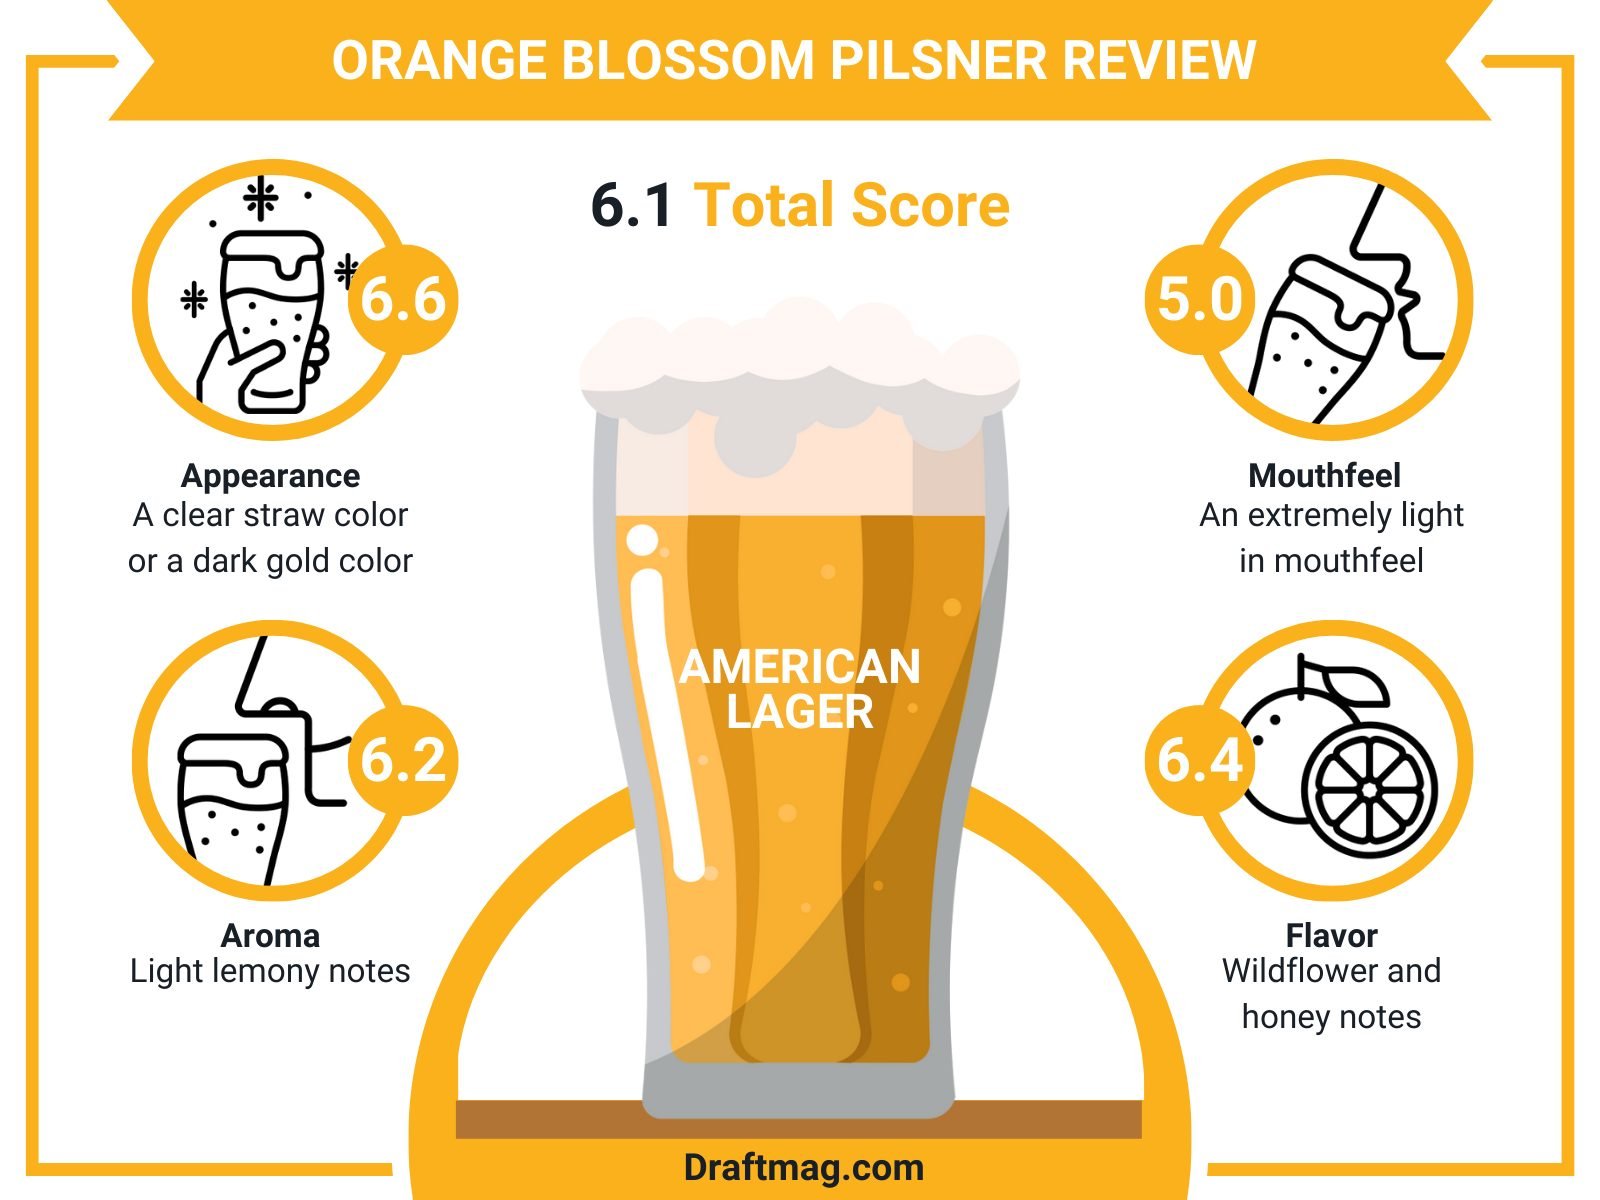 Orange Blossom Pilsner Review Infographic